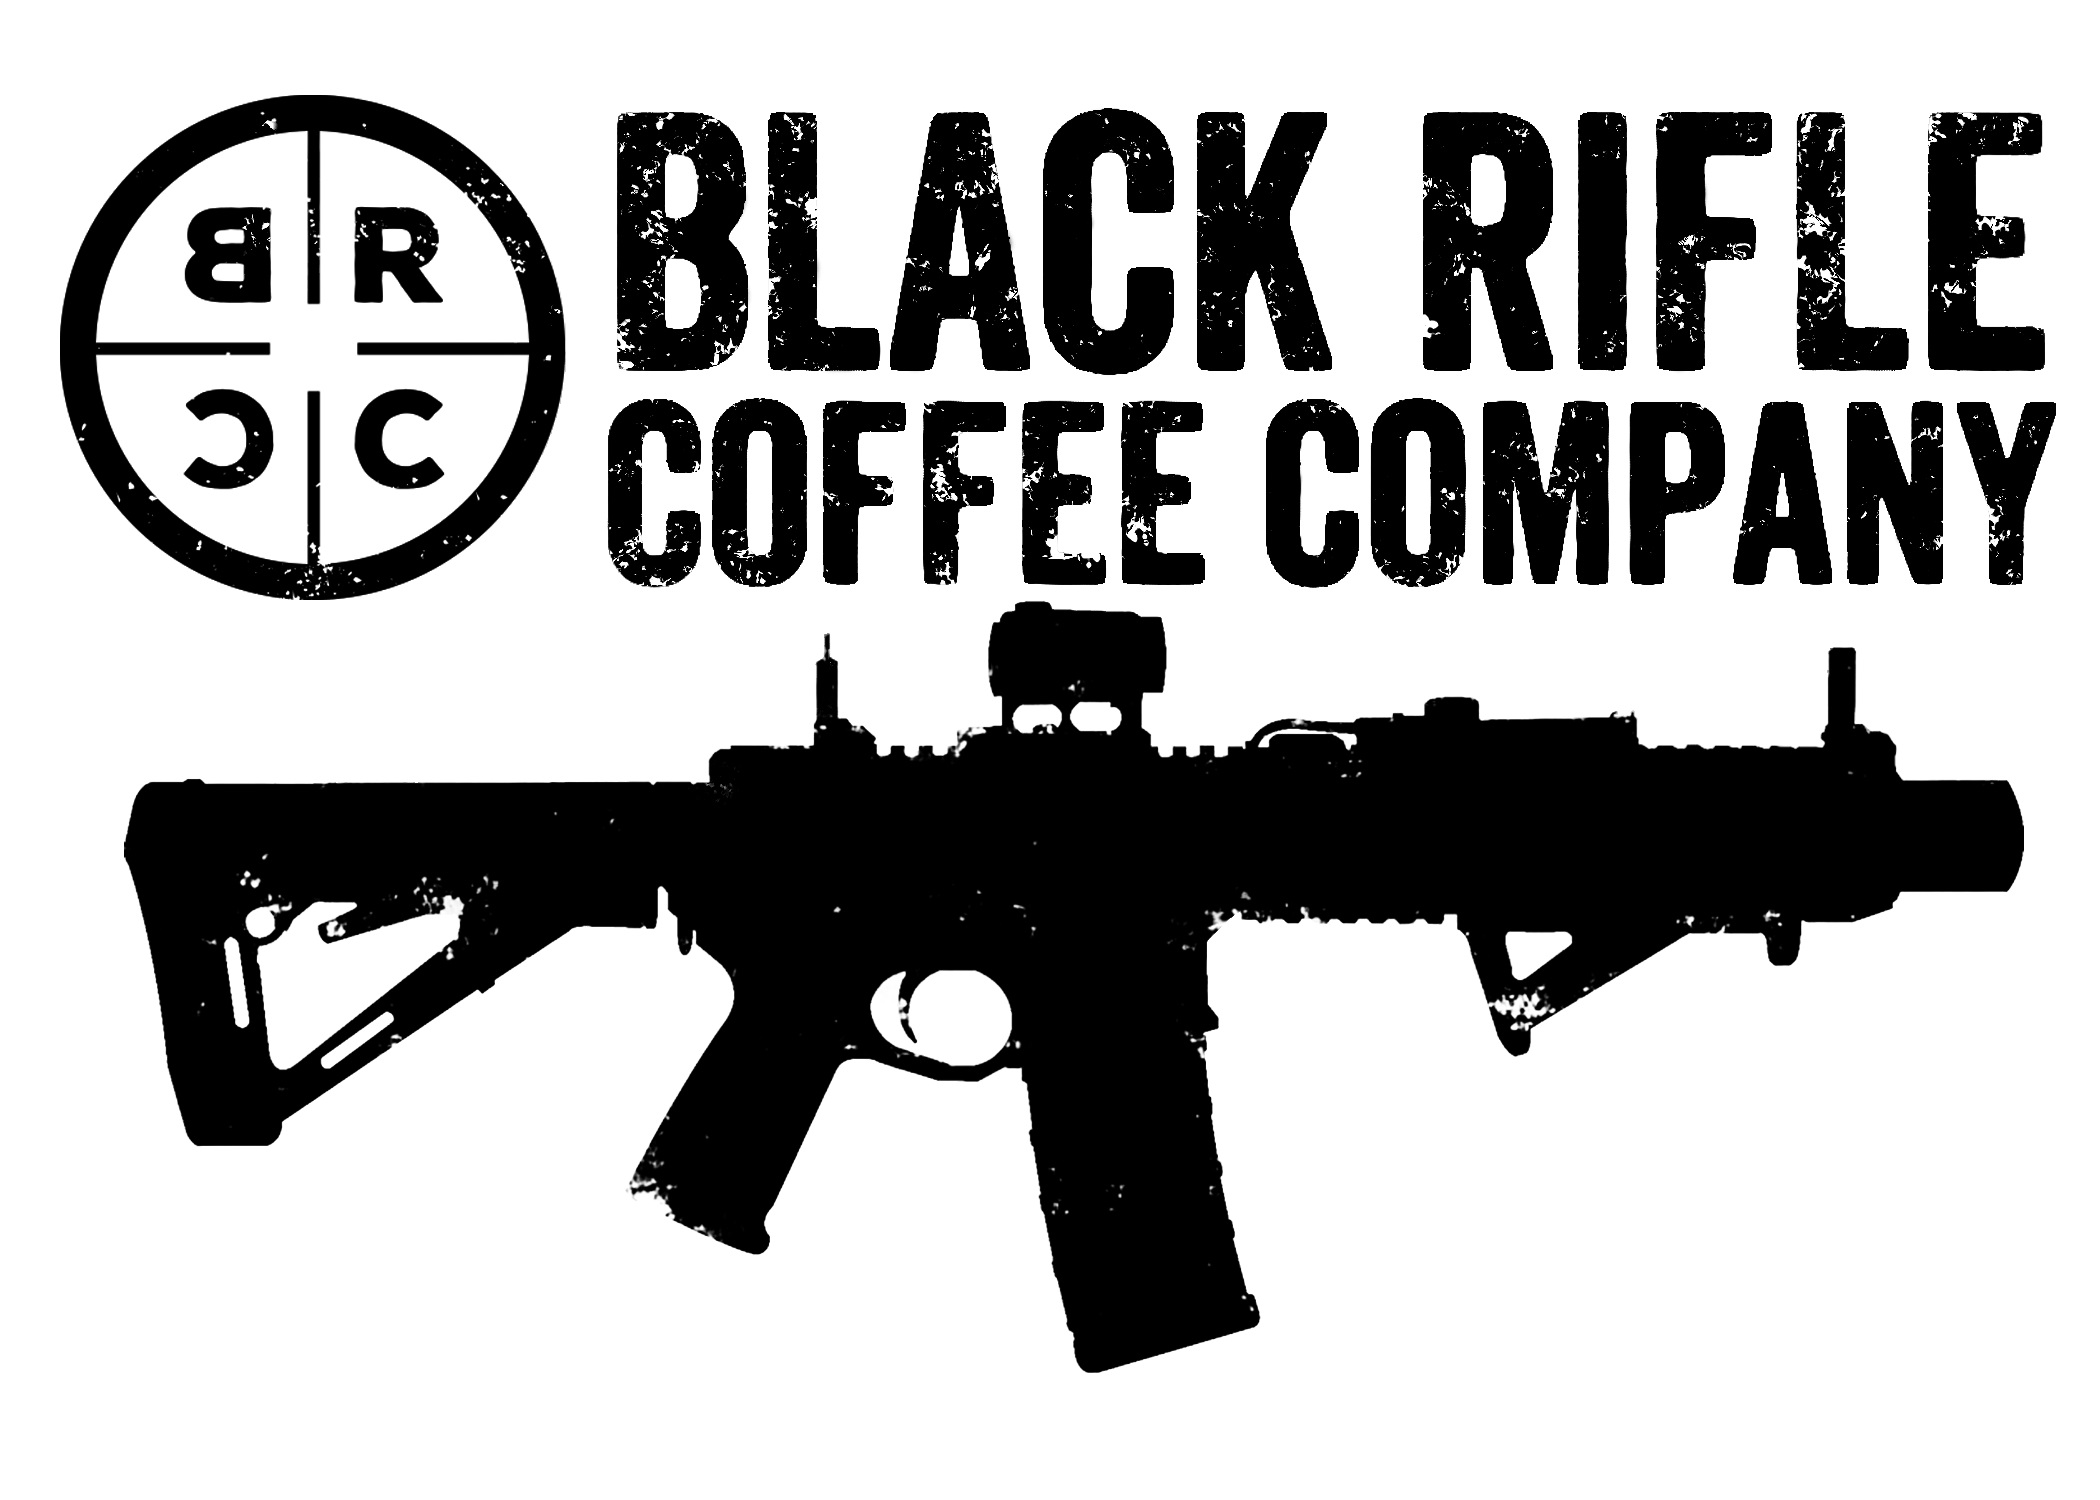 black rifle coffee